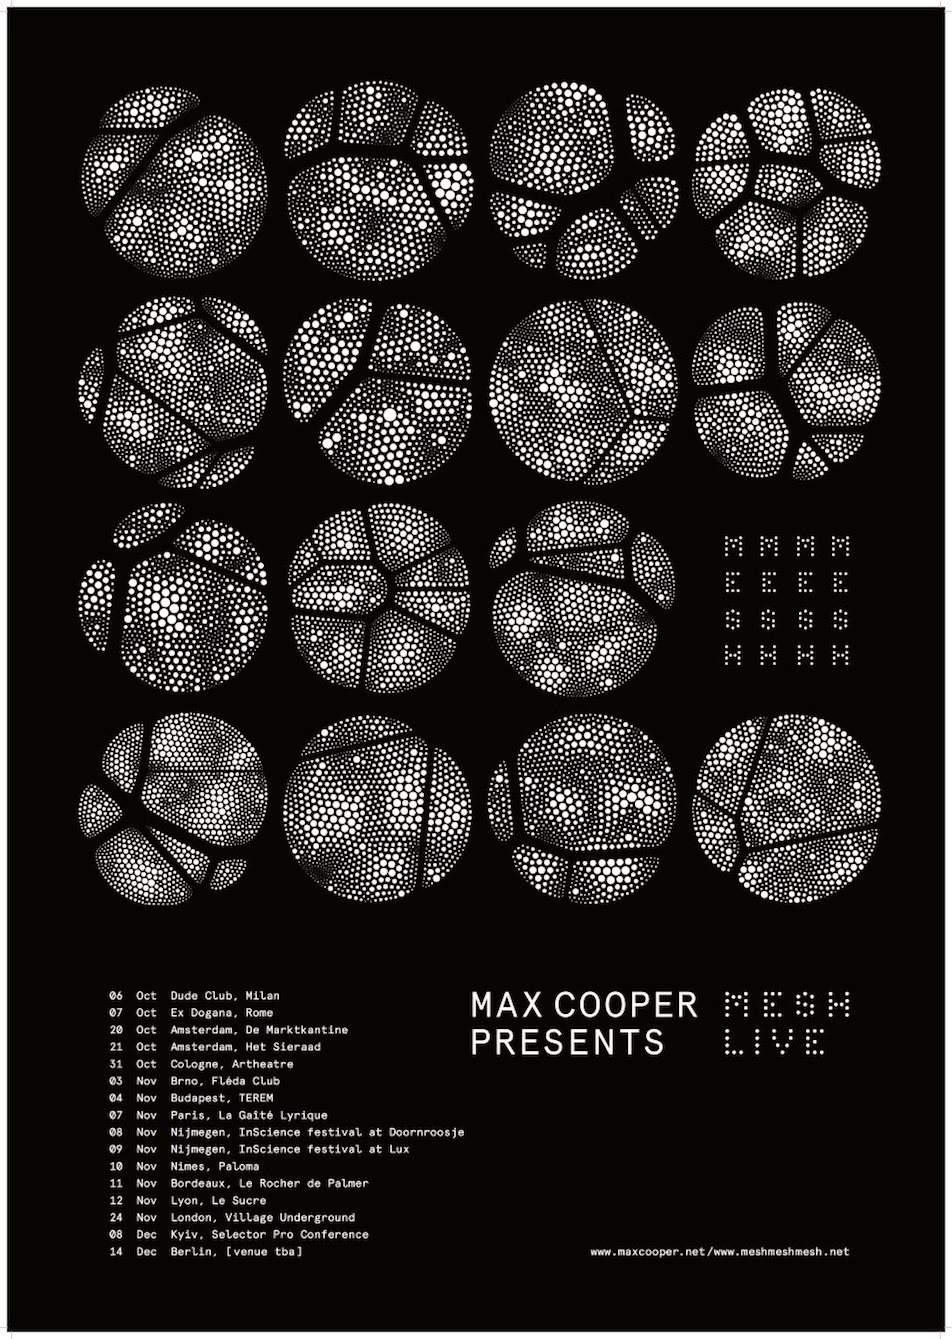 Max Cooper presents new European tour, MESH Live image